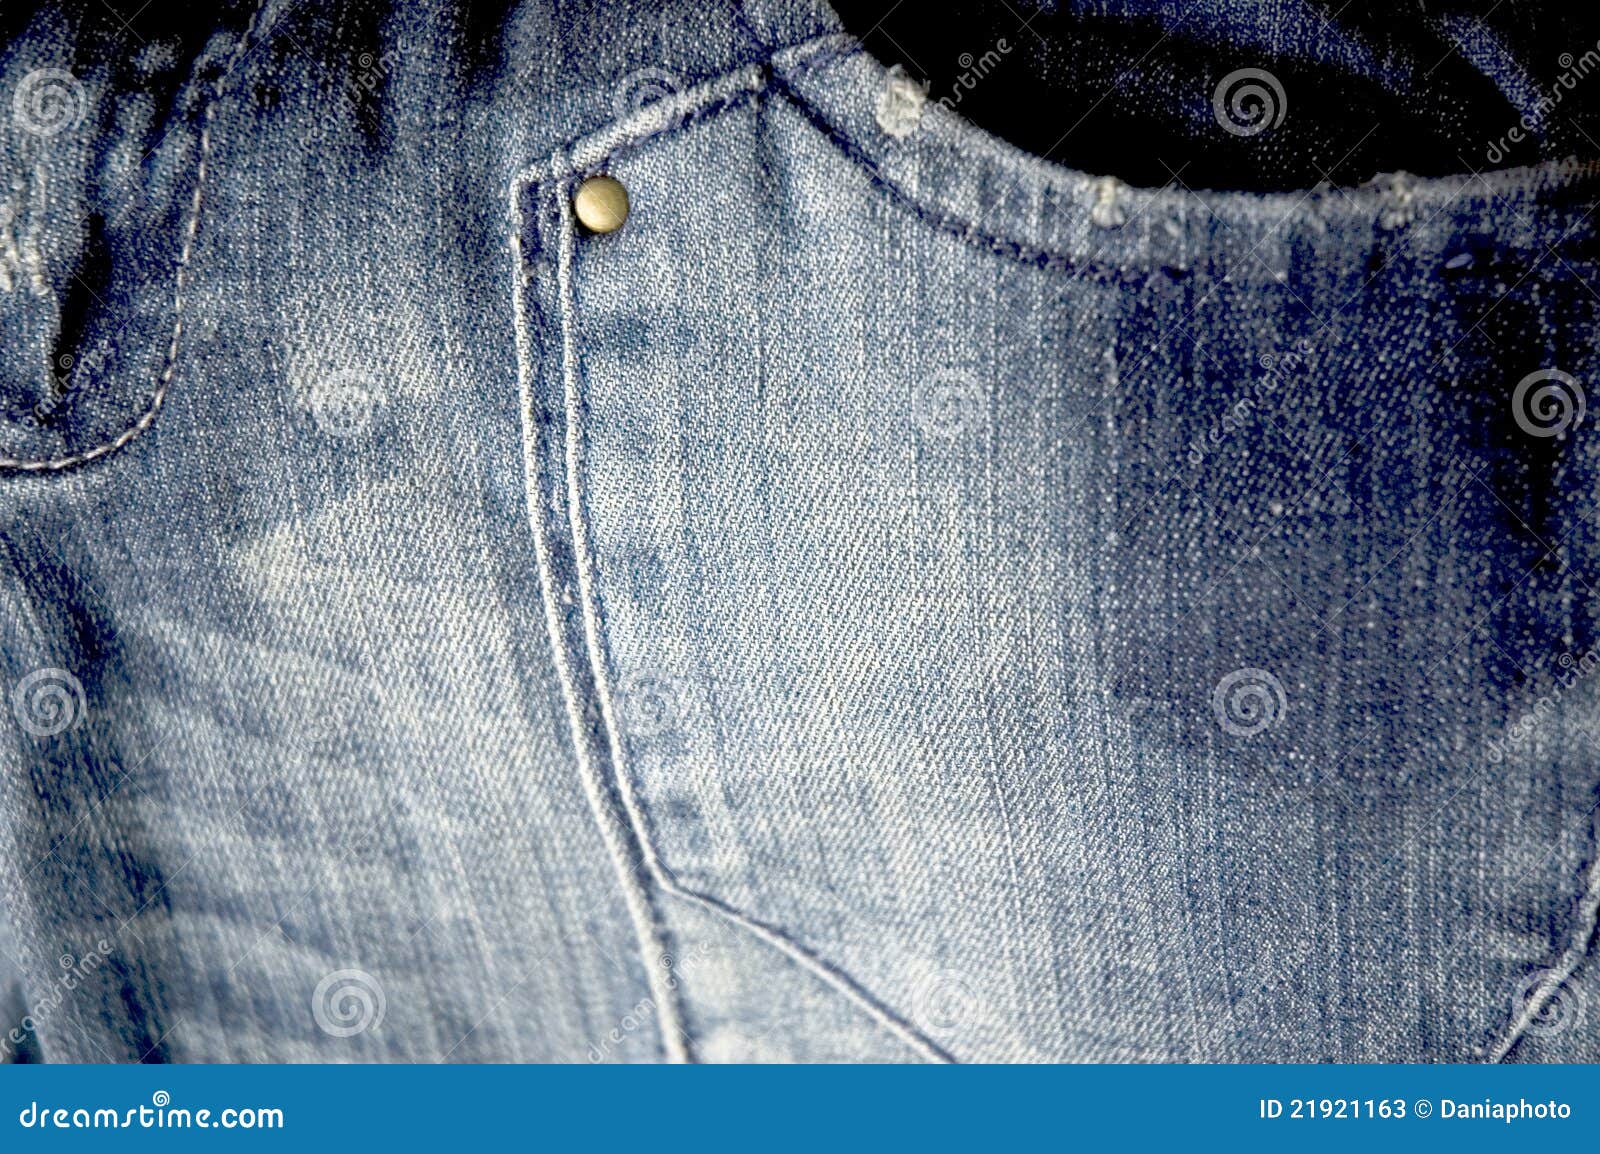 Jeans Pocket Close Up Stock Photos - Image: 21921163